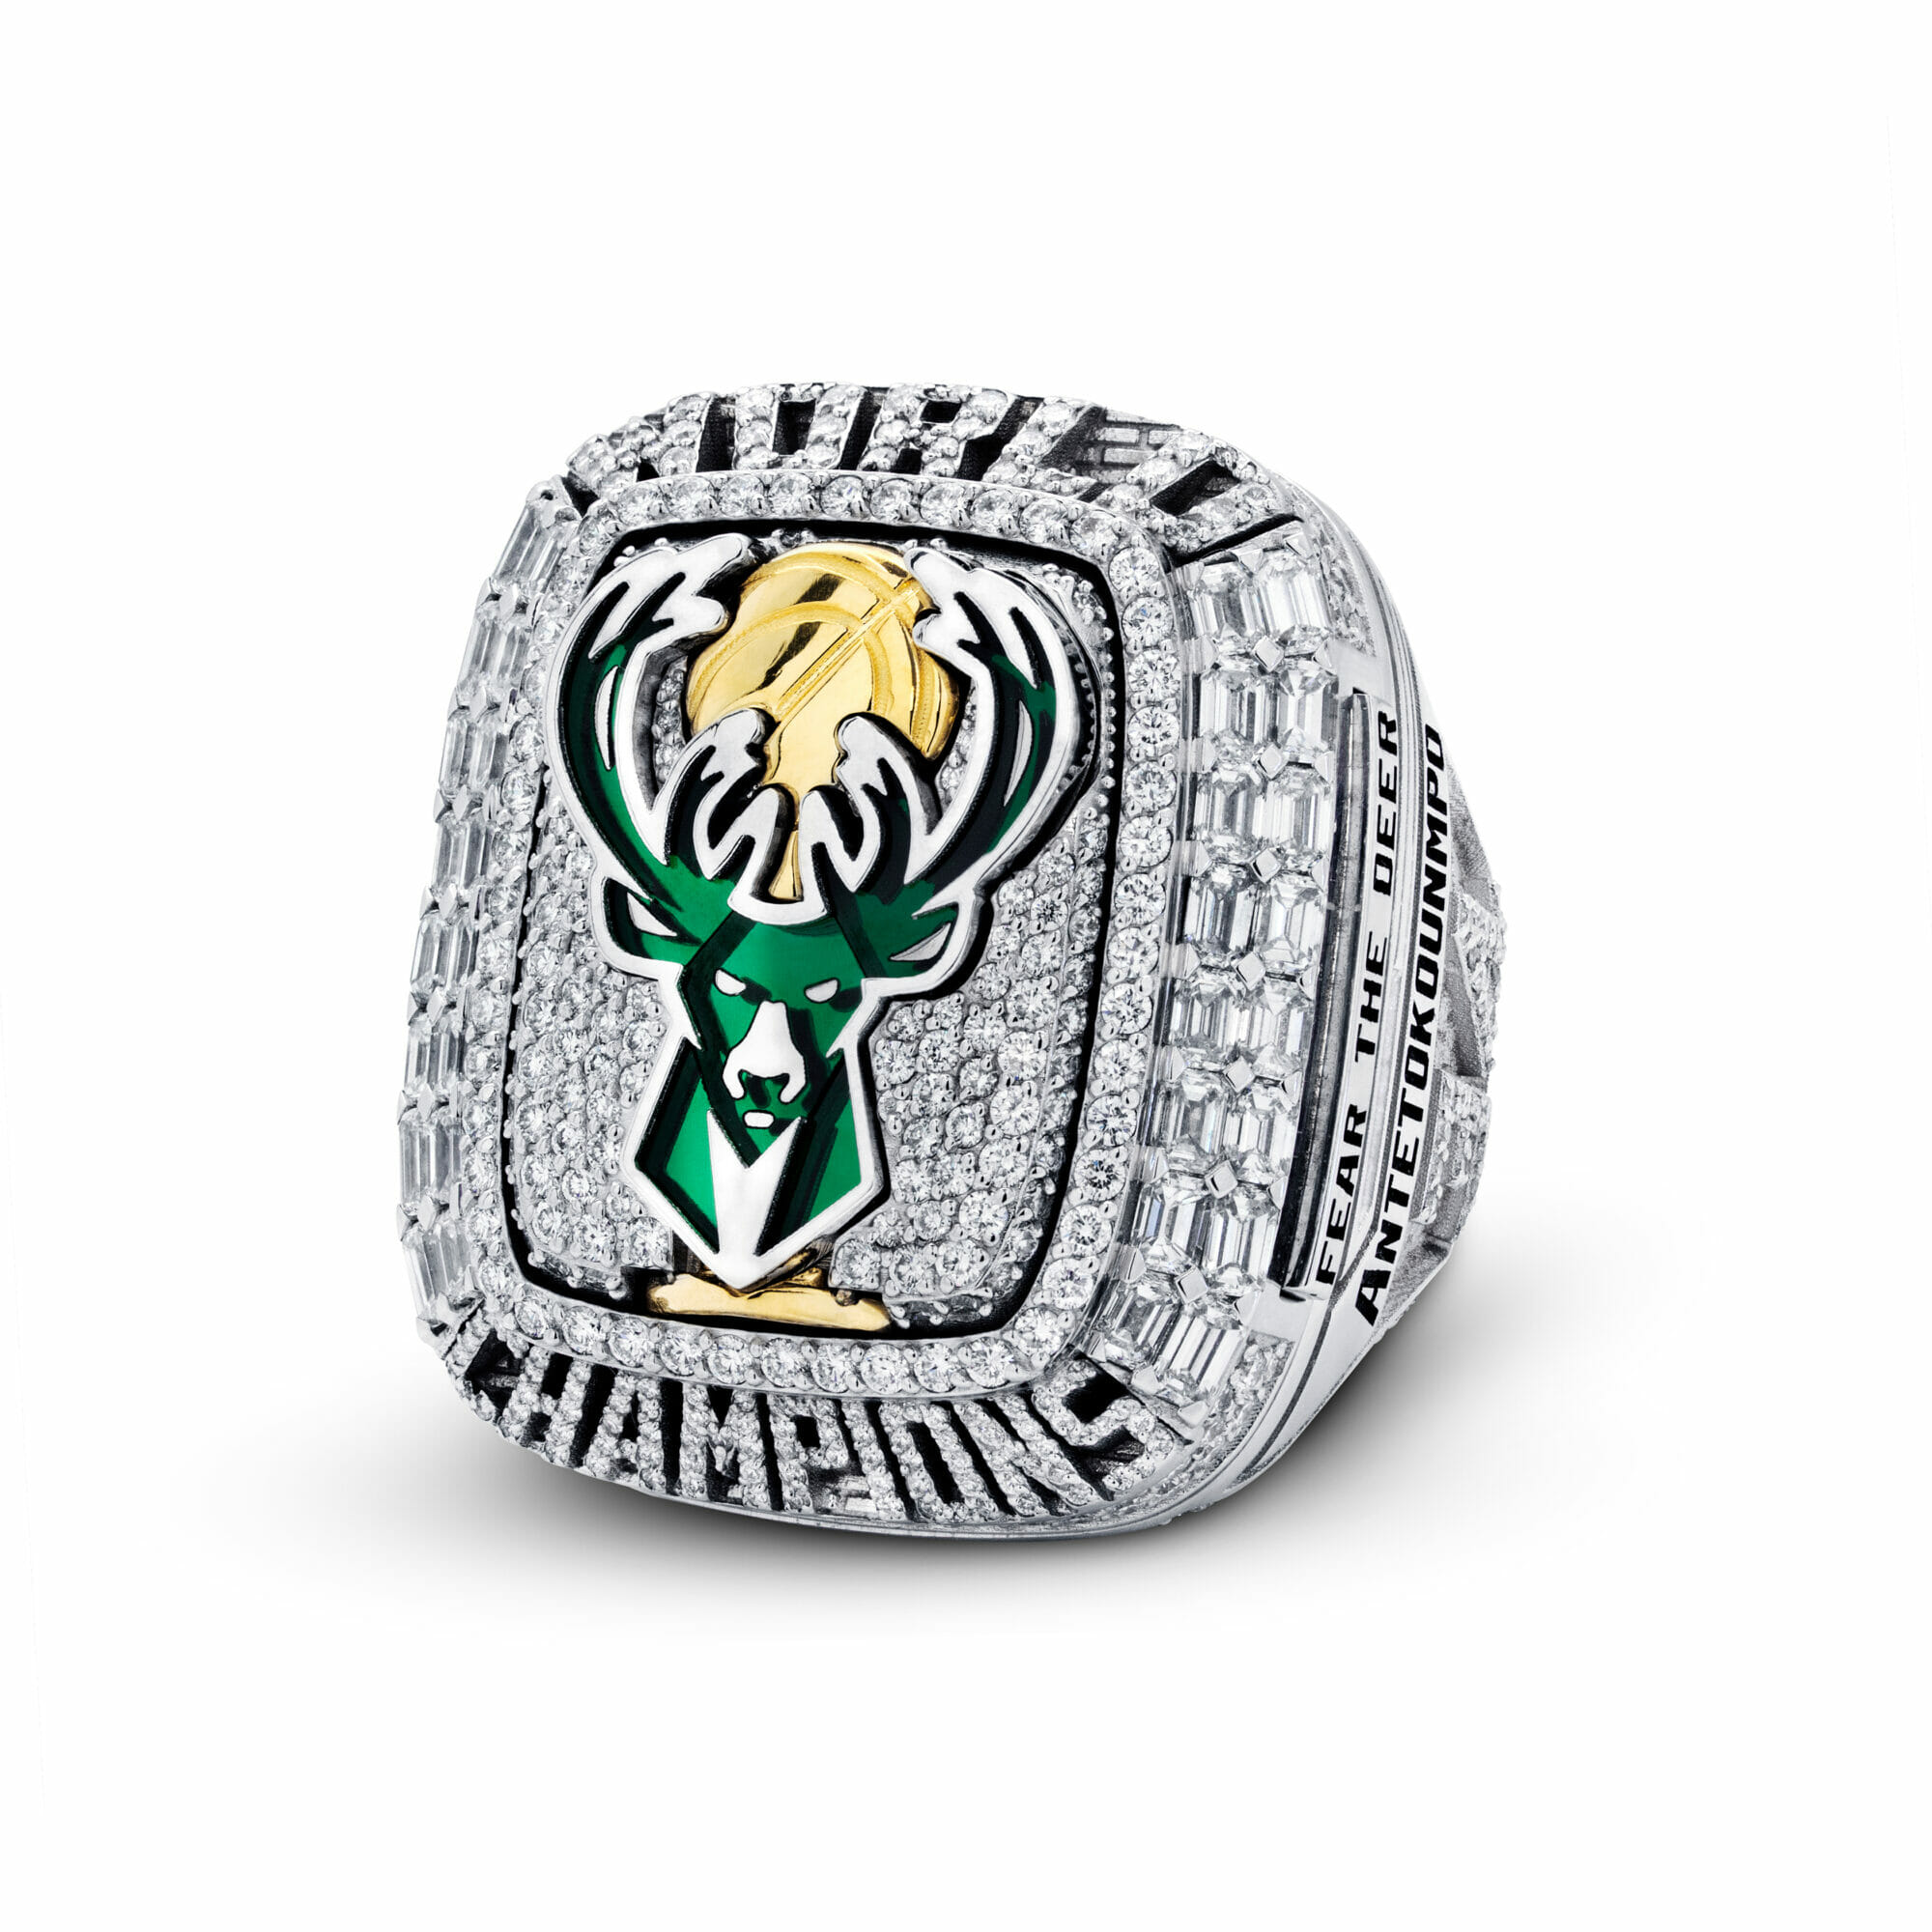 The Milwaukee Bucks NBA Championship Ring Has Insane Detail and Plenty of  Diamonds - Only Natural Diamonds